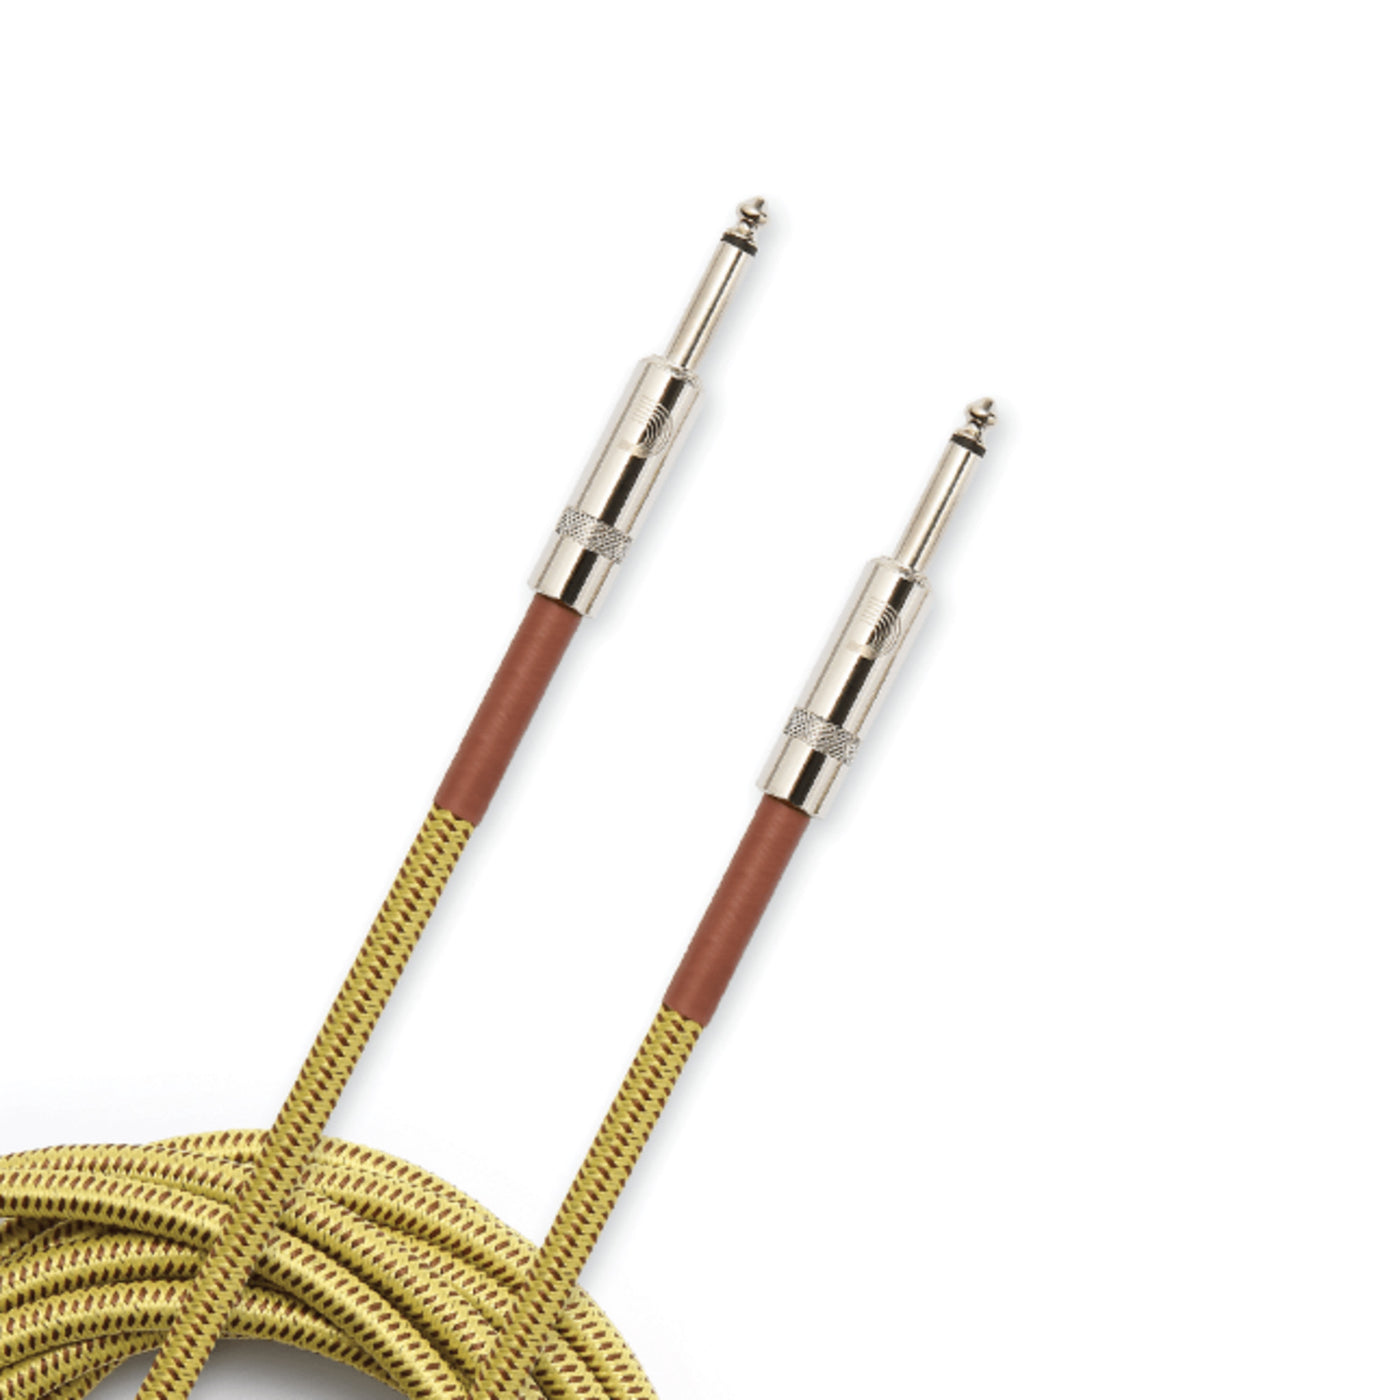 D'Addario Custom Series Braided Instrument Cable, Tweed, 20' (PW-BG-20TW)